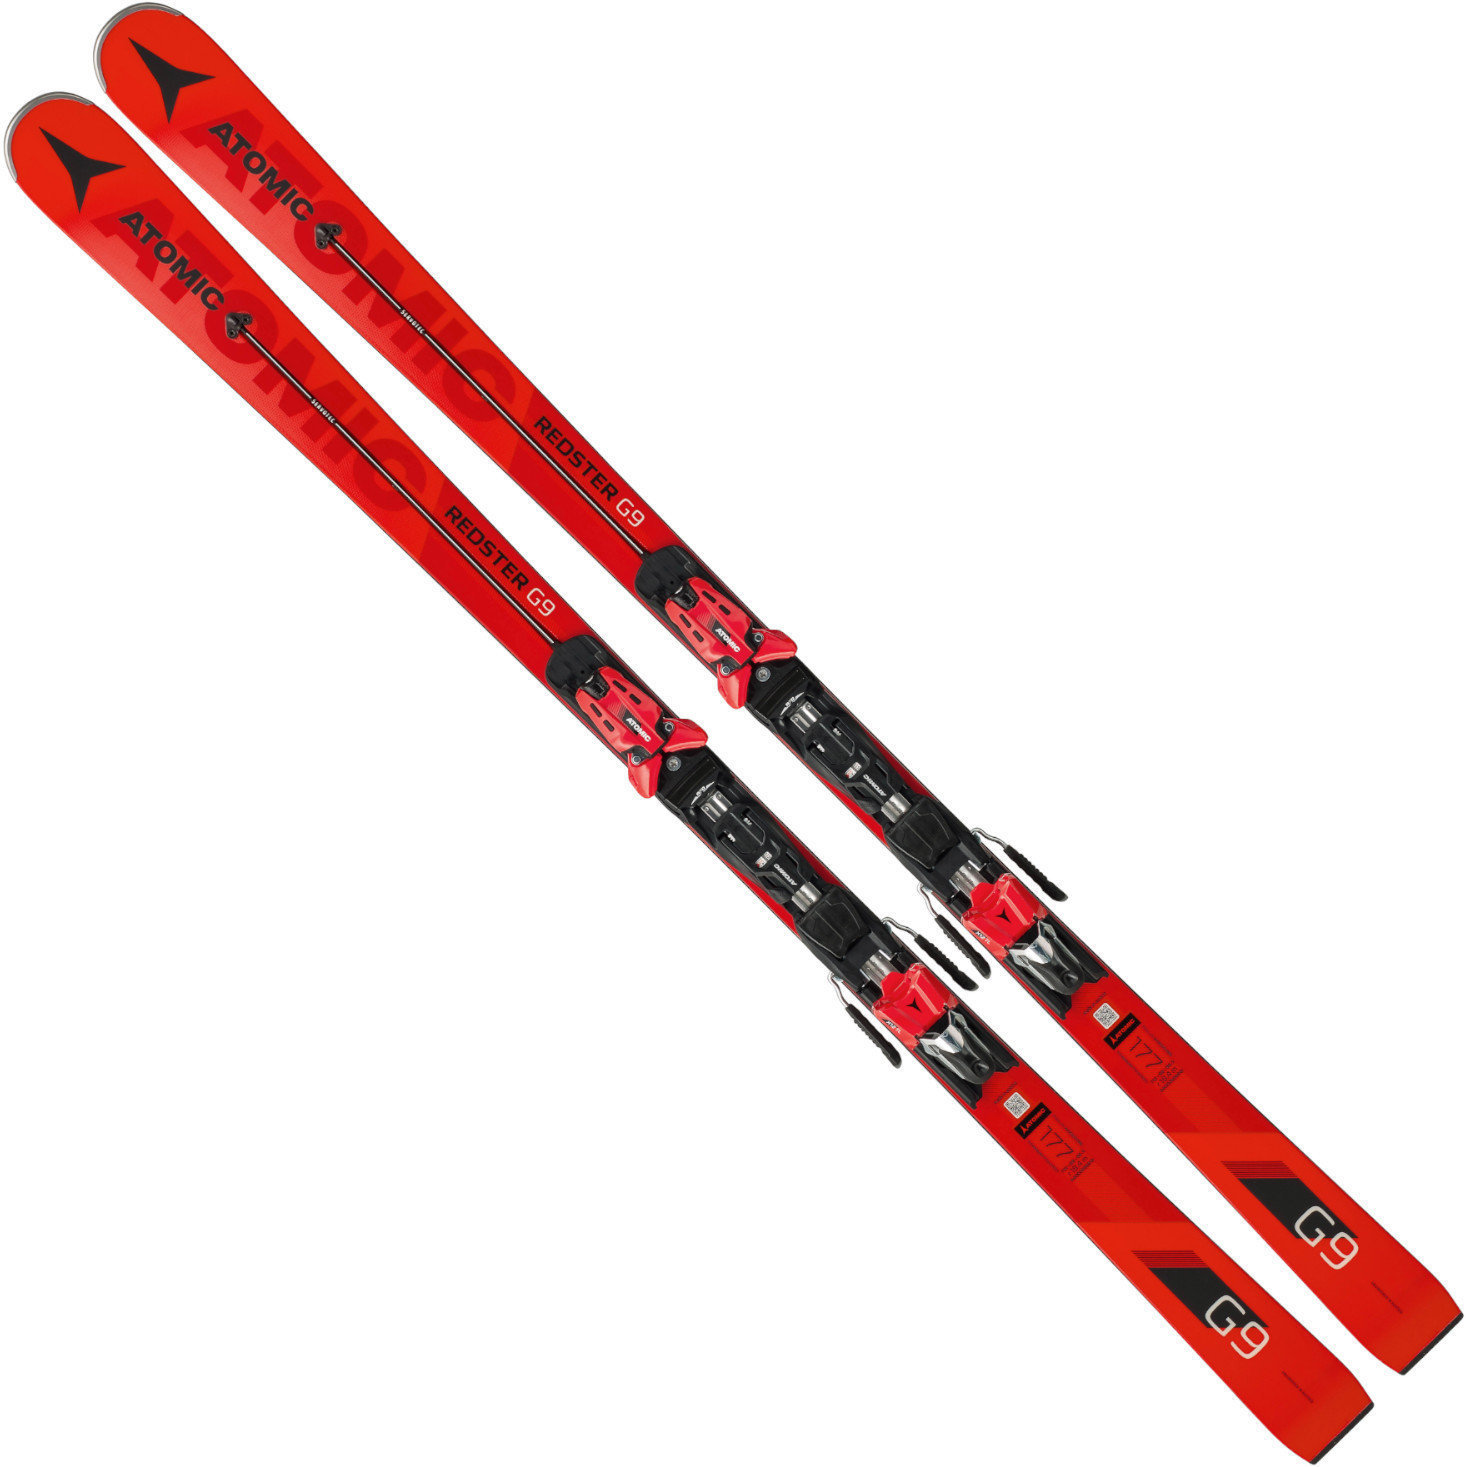 Esquís Atomic Redster G9 + X 12 TL R 183 18/19